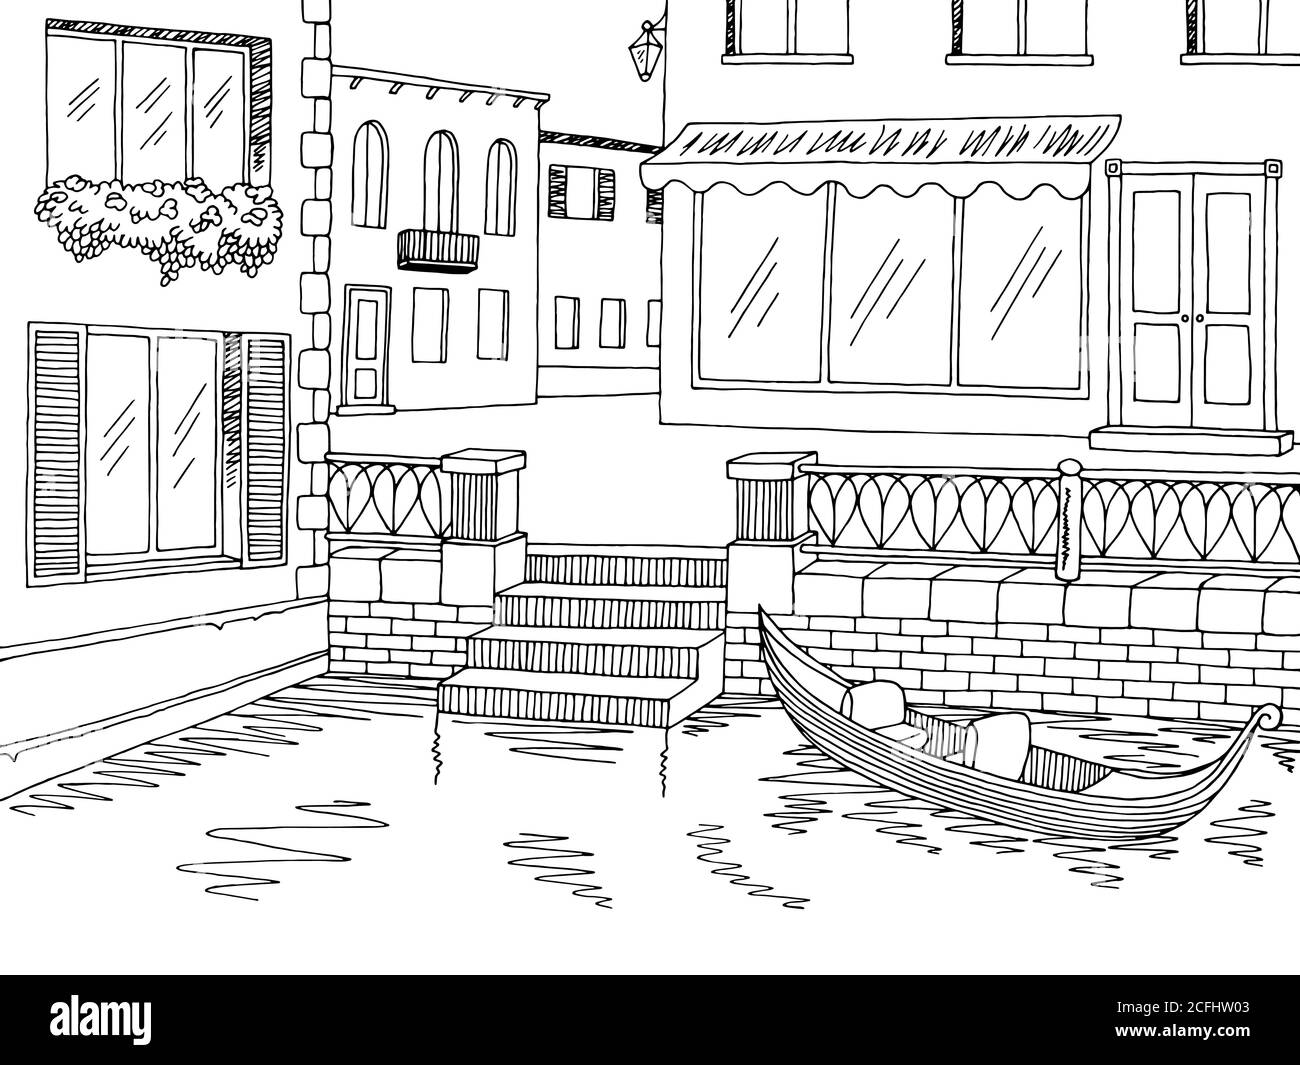 Stadt Fluss Grafik schwarz weiß Skizze Illustration Vektor Stock Vektor